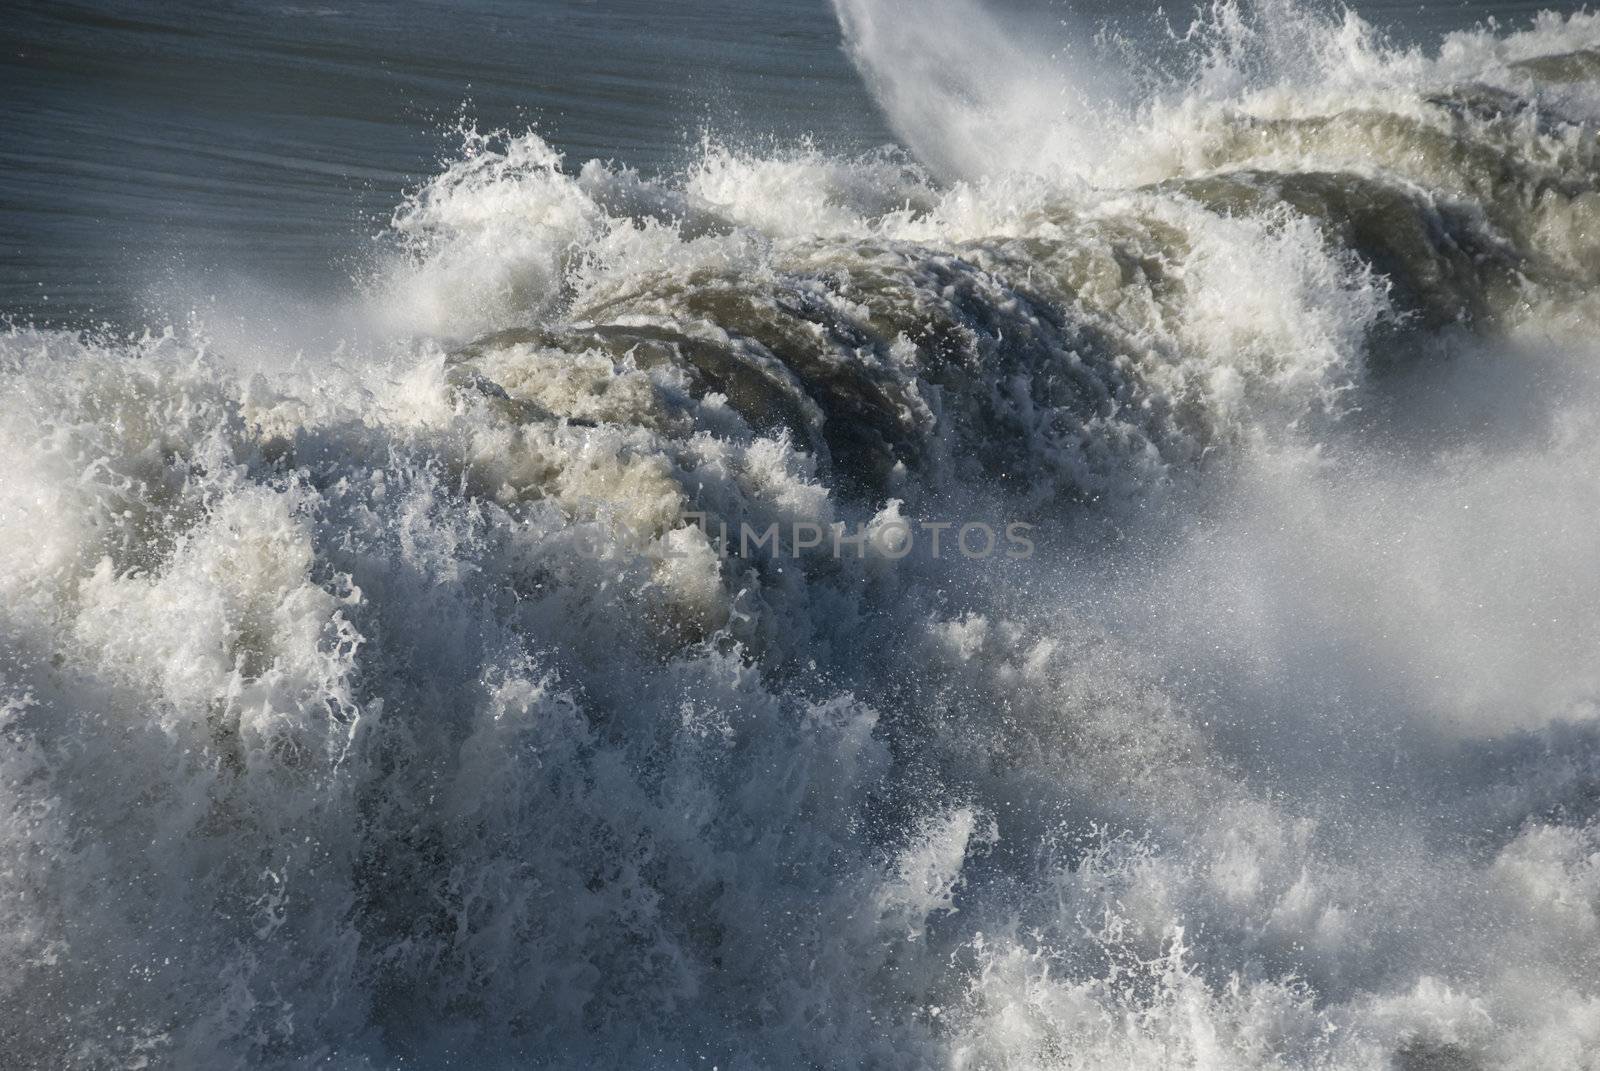 Crushing Wave, Lido di Camaiore, 2008 by jovannig